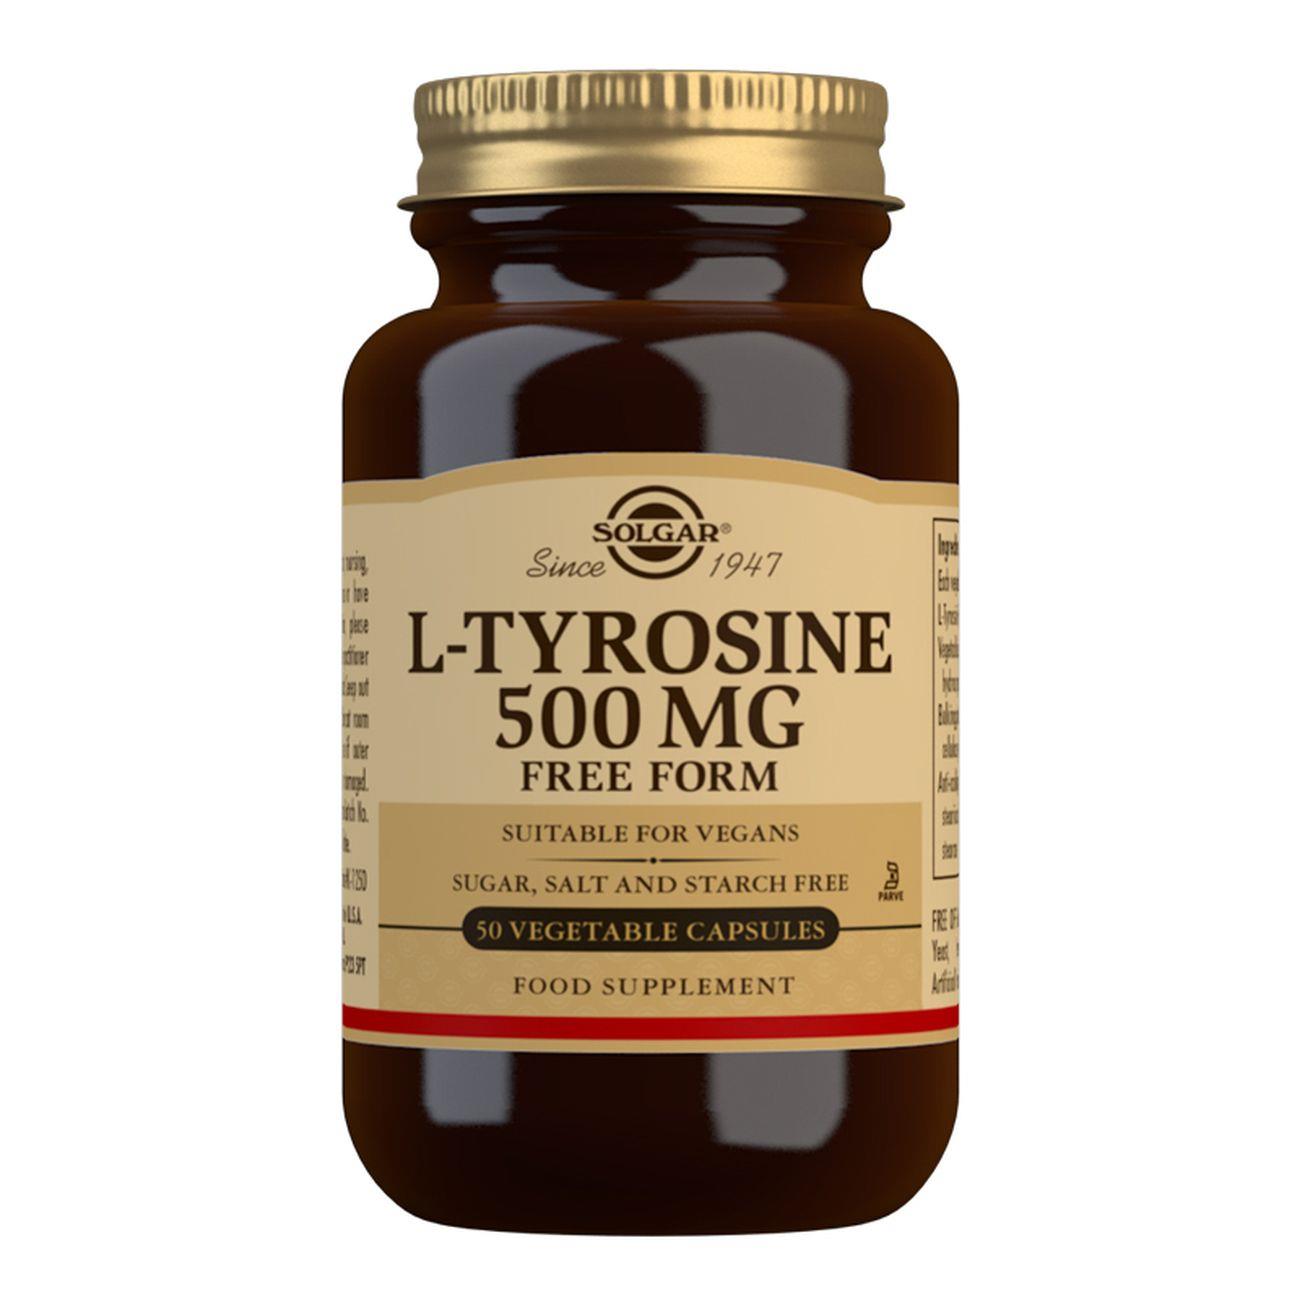 L-Tyrosine 500 mg - 50 Vegetable Capsules